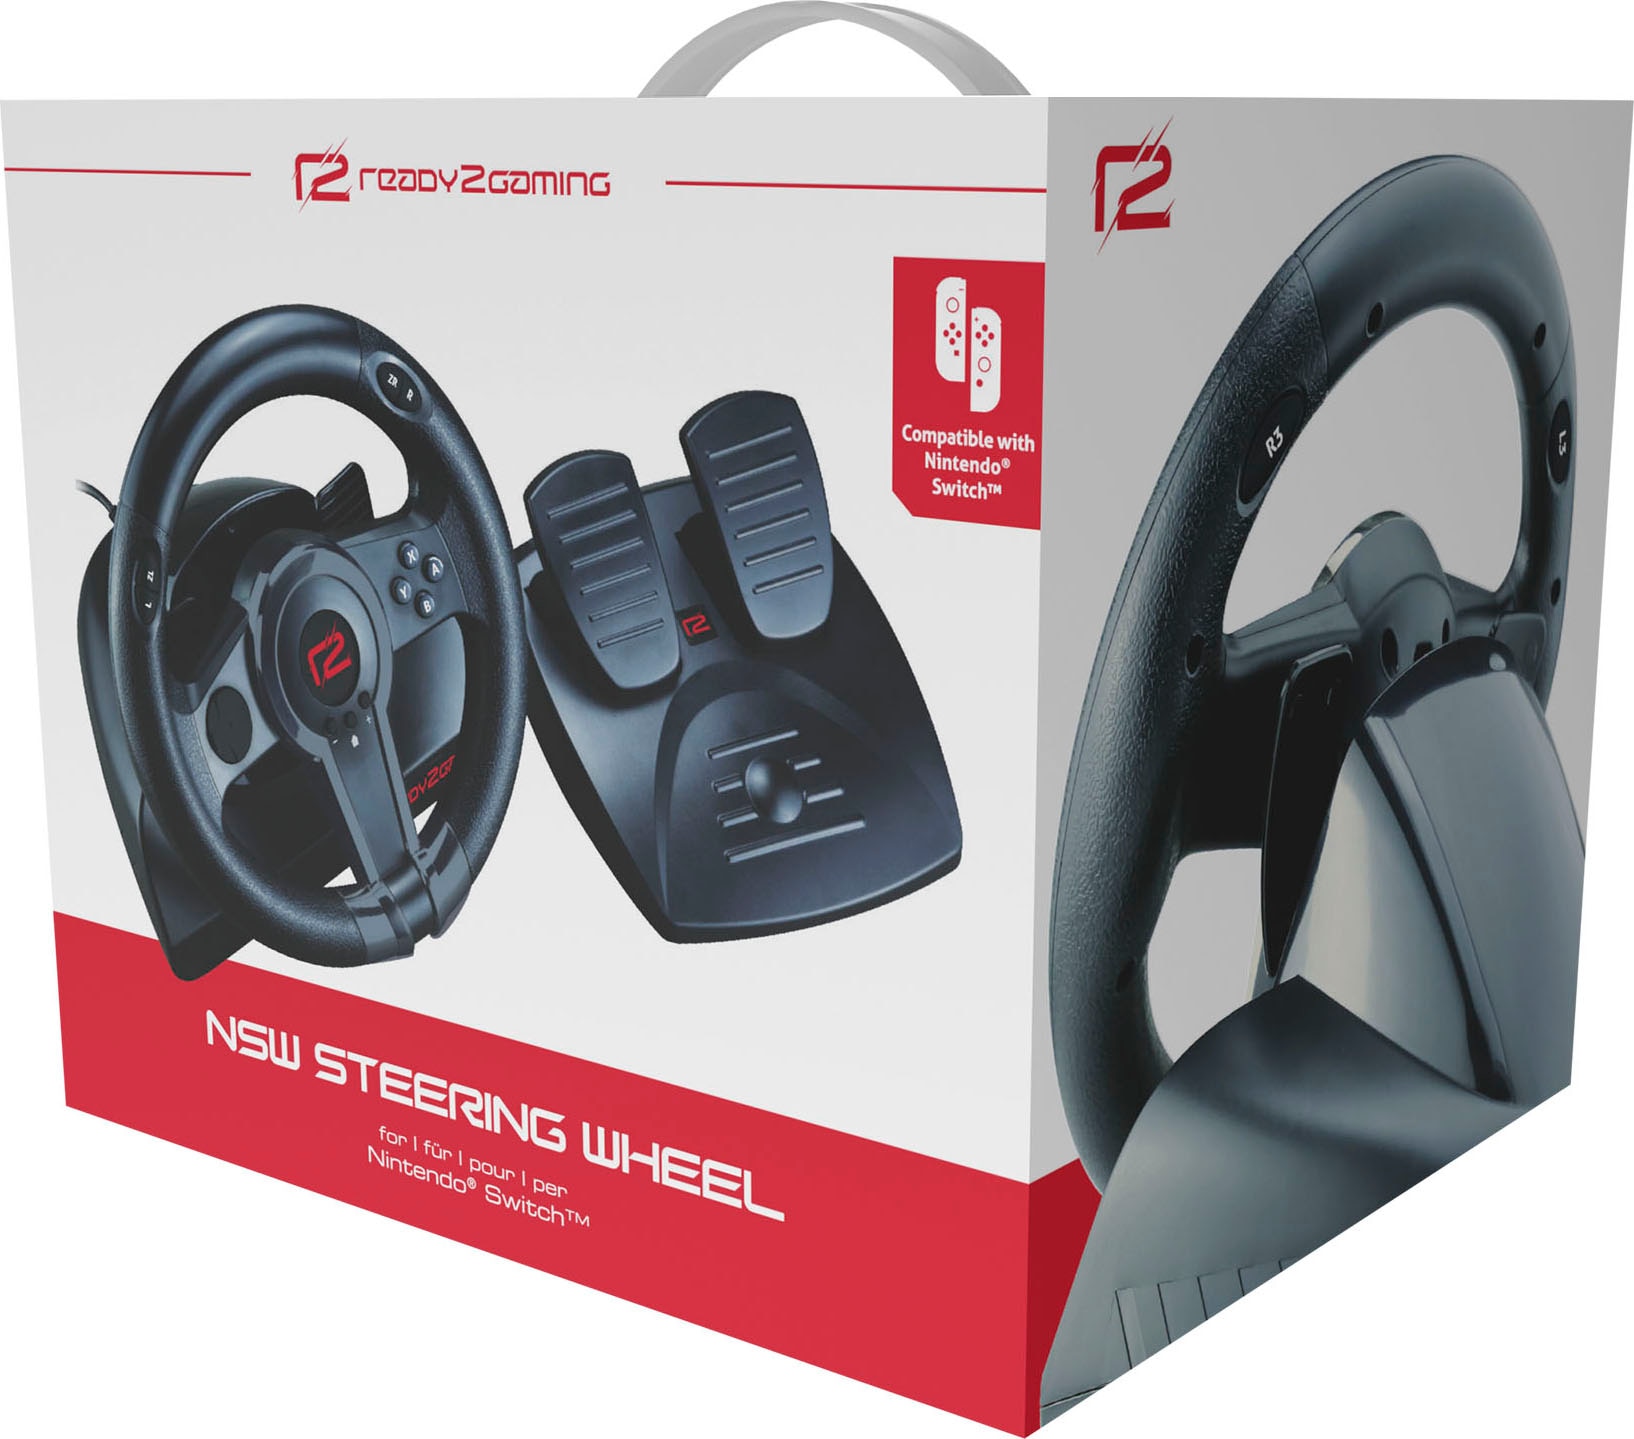 Hori Gaming-Lenkrad »PS4 RWA: Racing Wheel Apex« jetzt bestellen bei OTTO